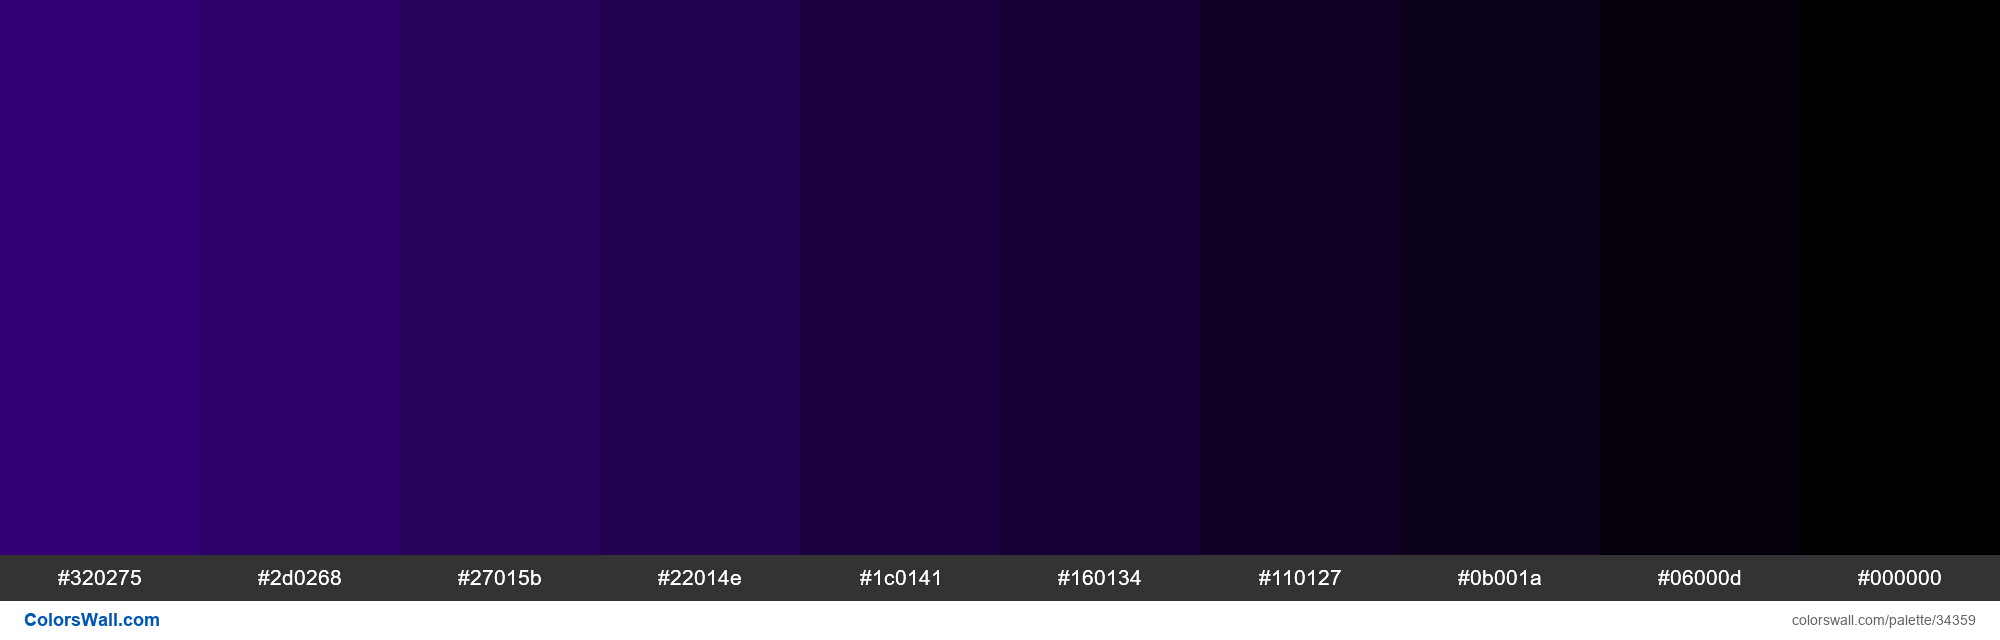 Shades XKCD Color indigo #380282 hex colors palette - ColorsWall